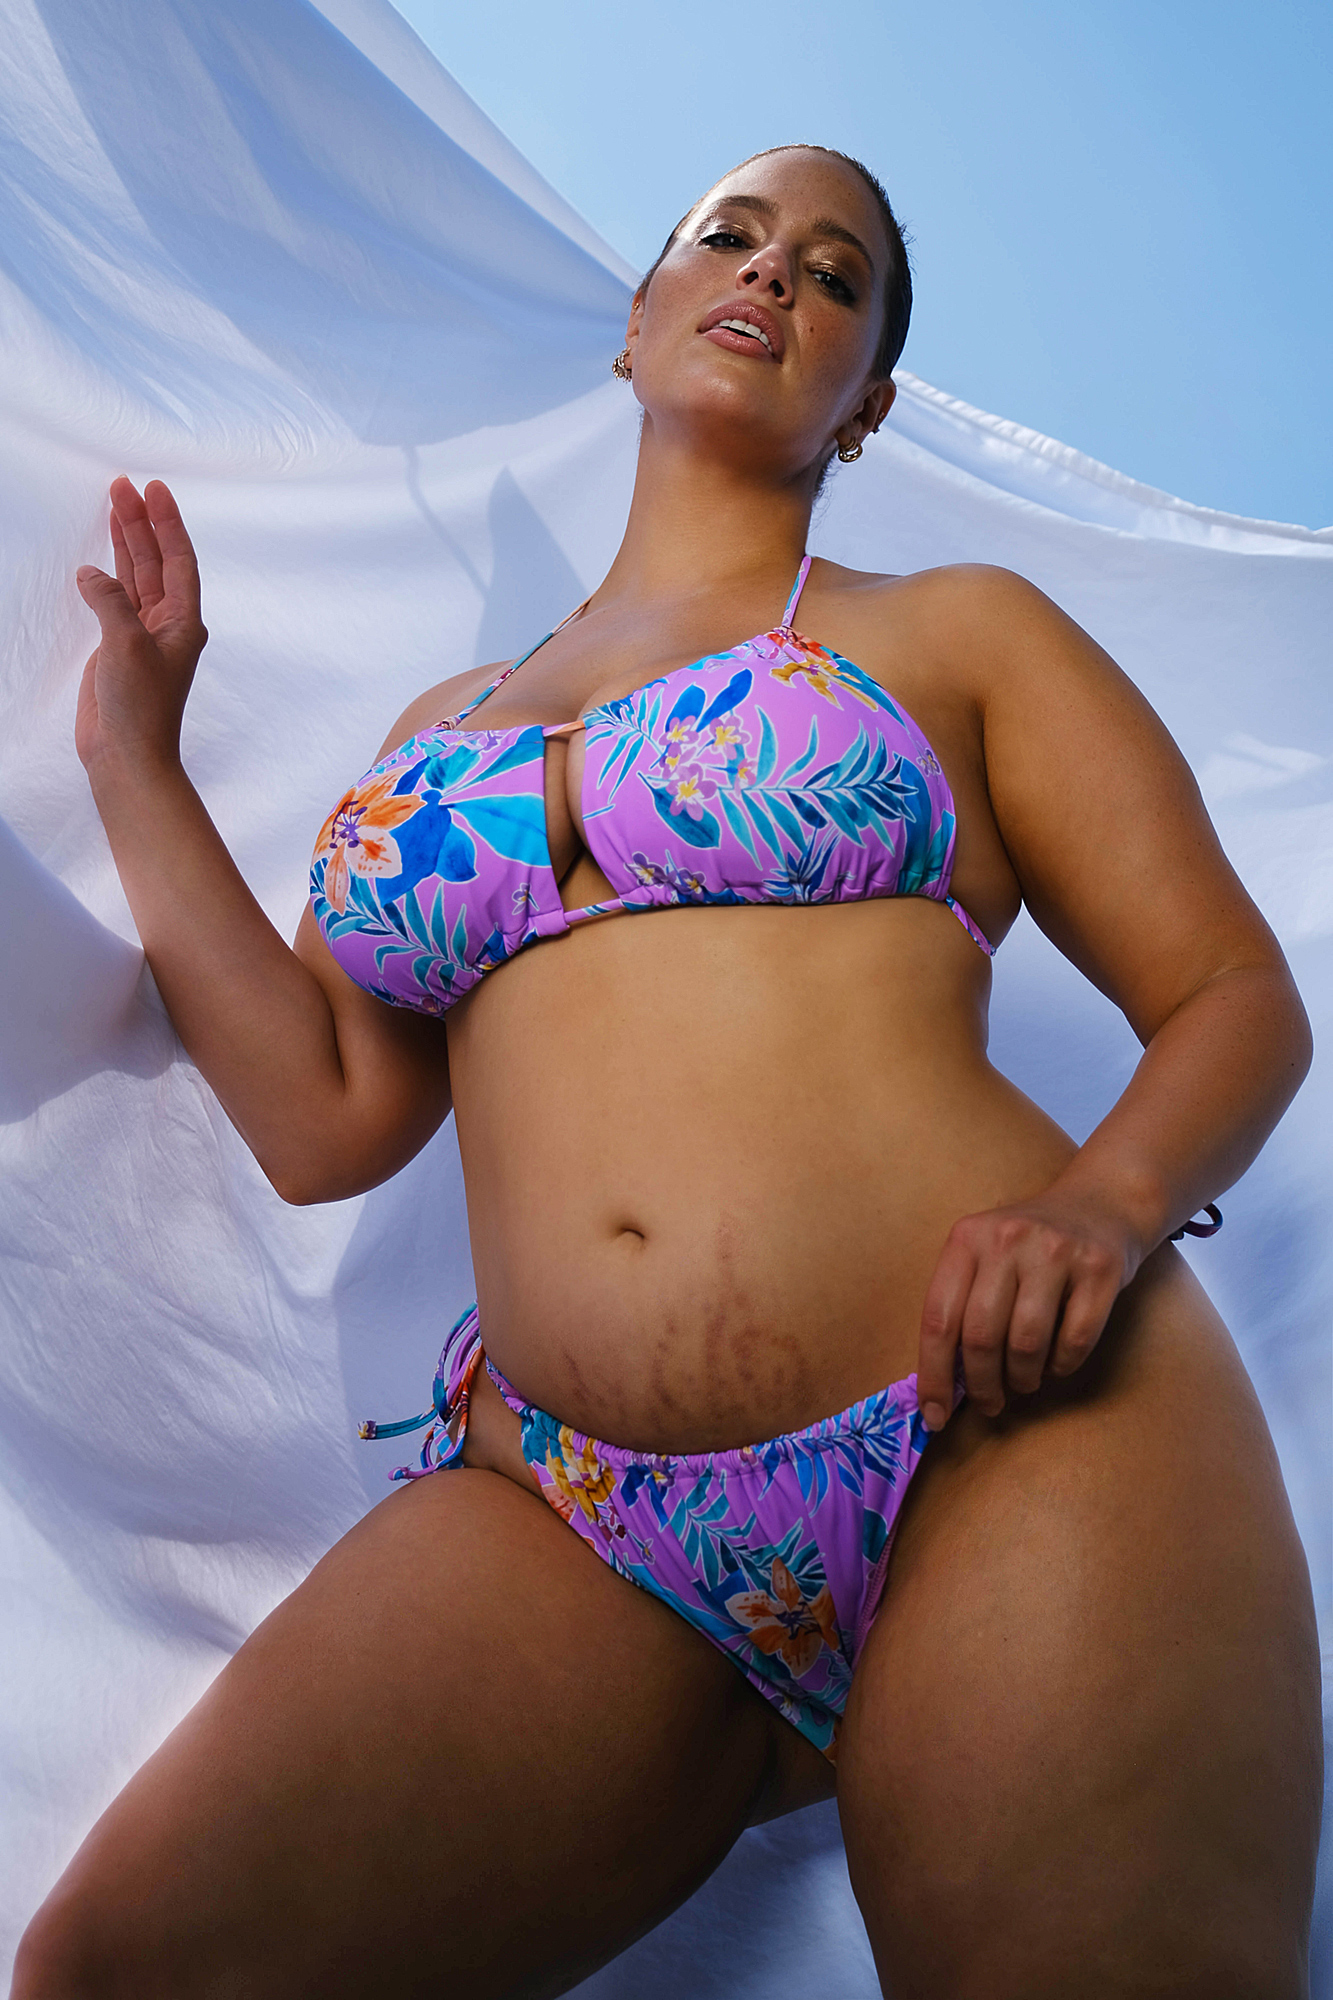 https://www.usmagazine.com/wp-content/uploads/2020/07/Ashley-Graham-swimsuitsforall-stretch-marks.jpg?quality=74&strip=all